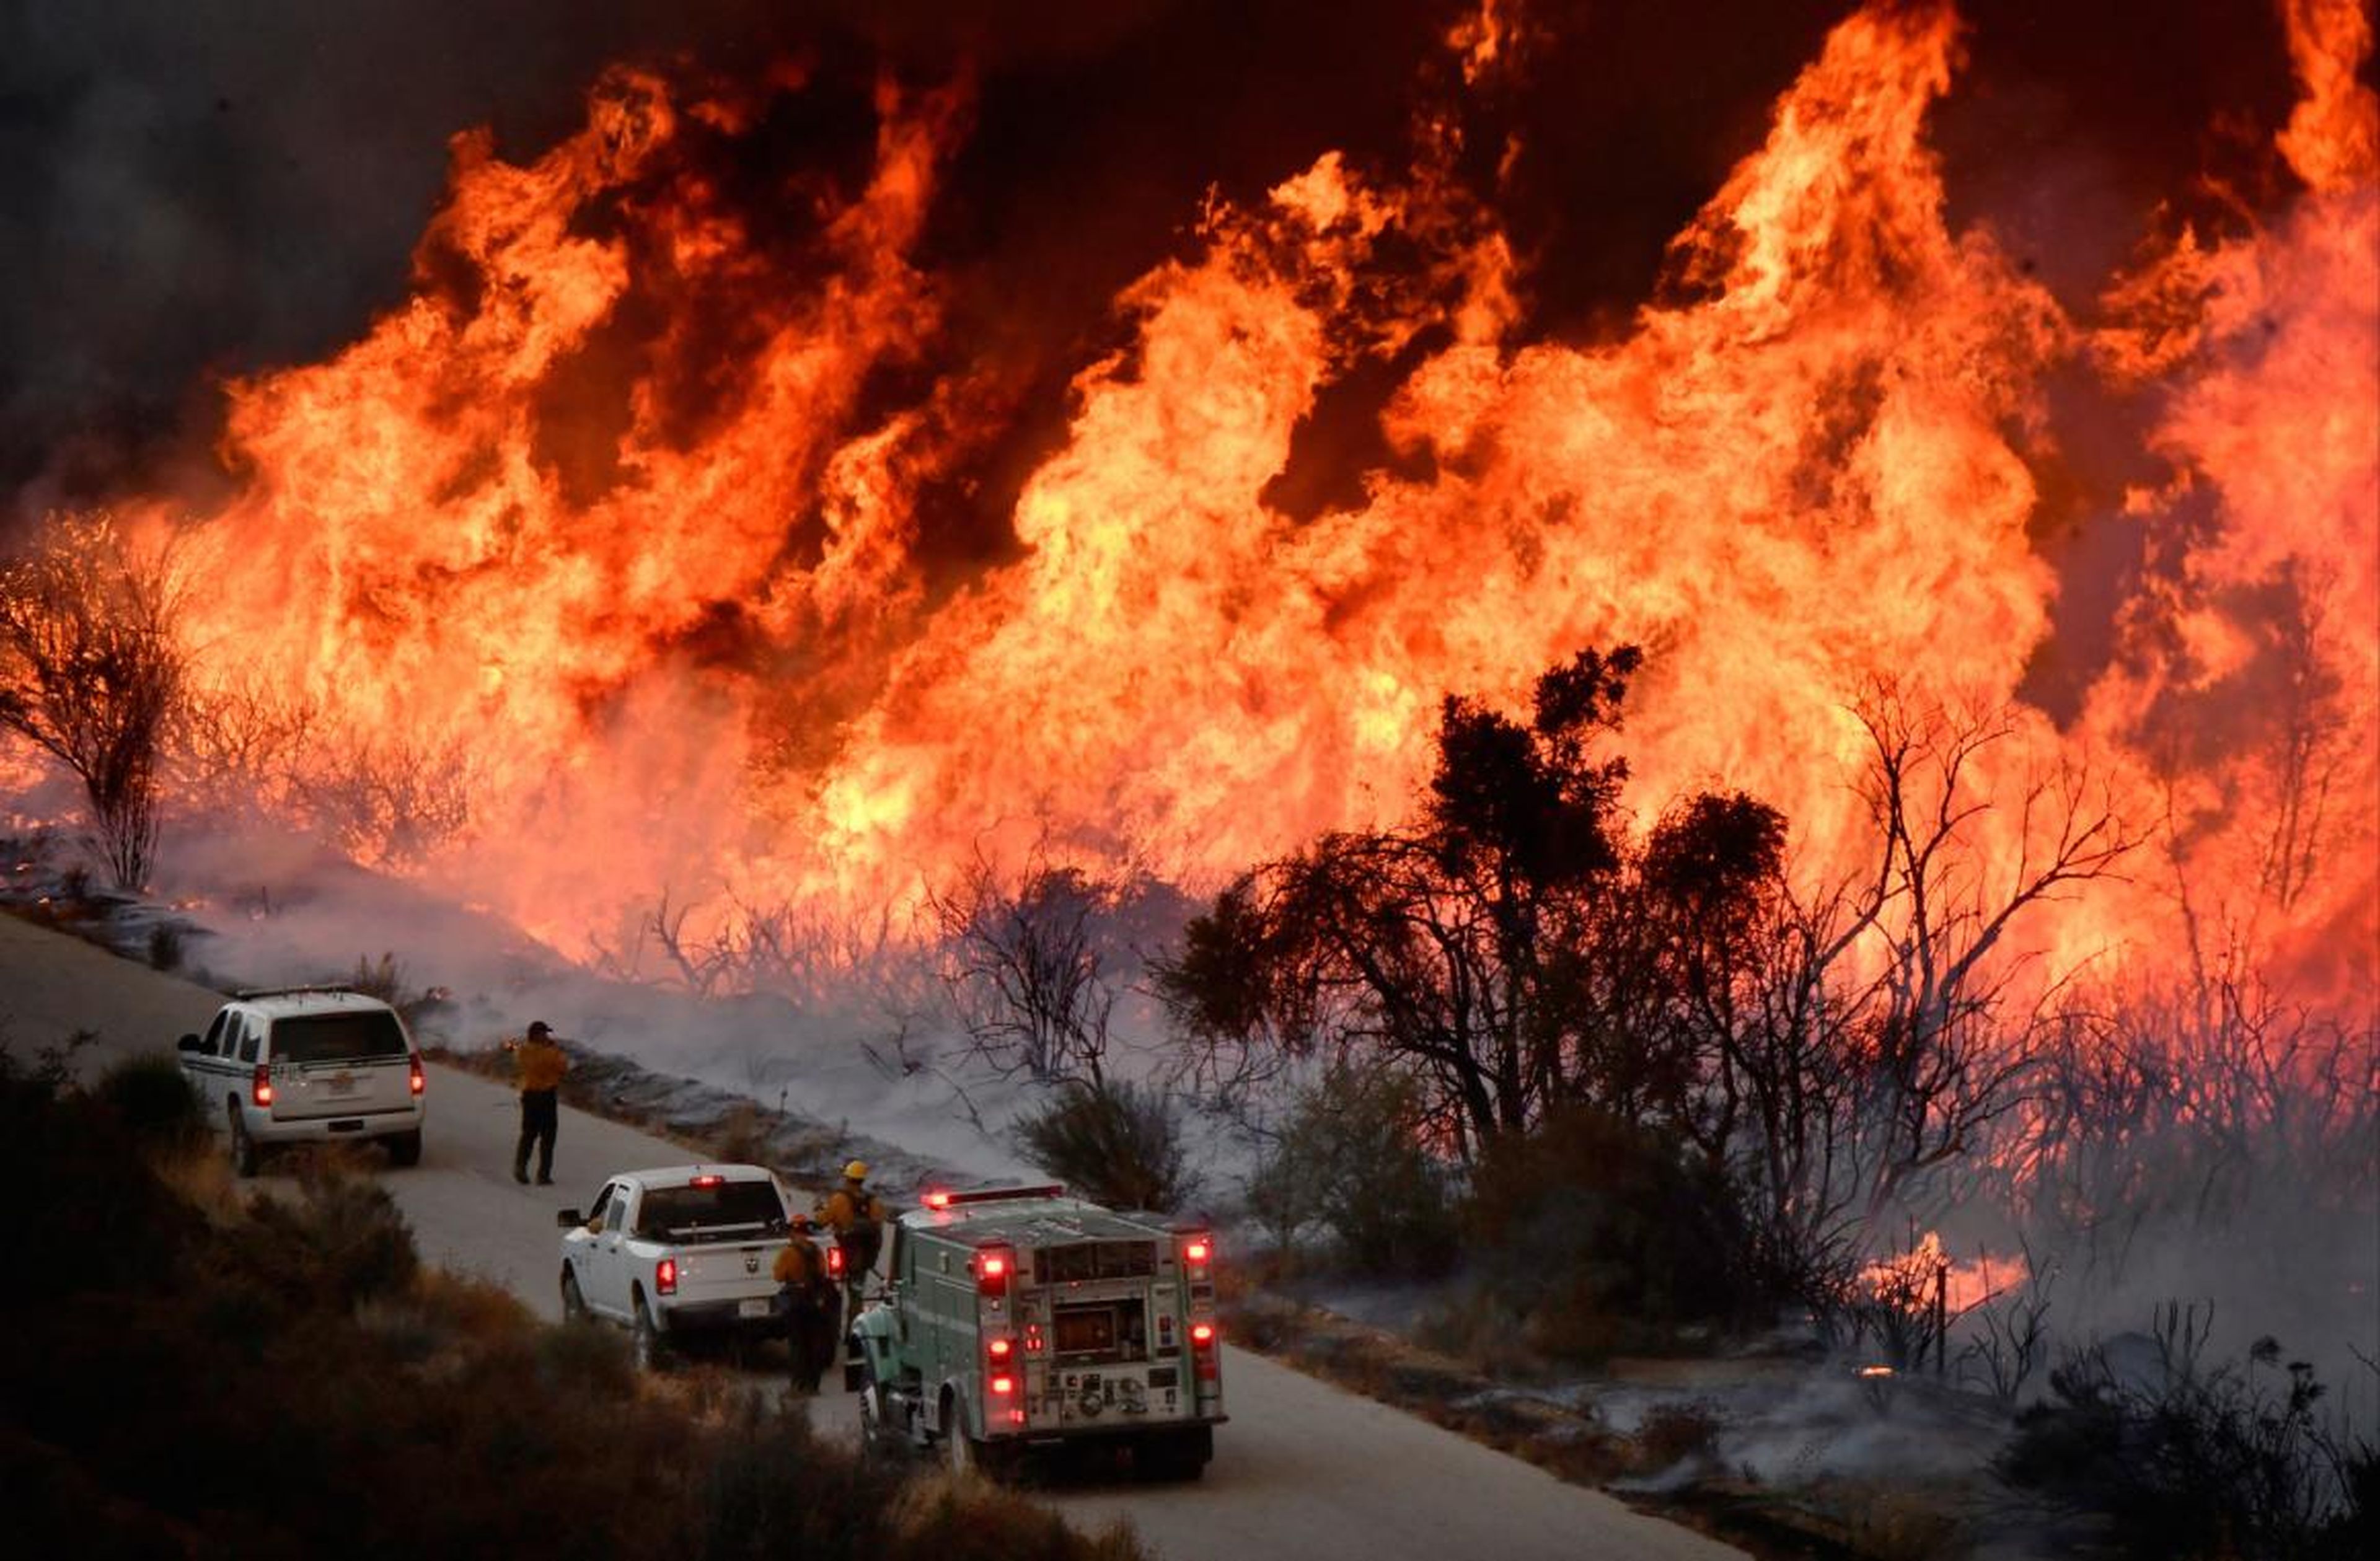 Fire fighters battle the Thomas Fire near Ojai, California on December 9, 2017.